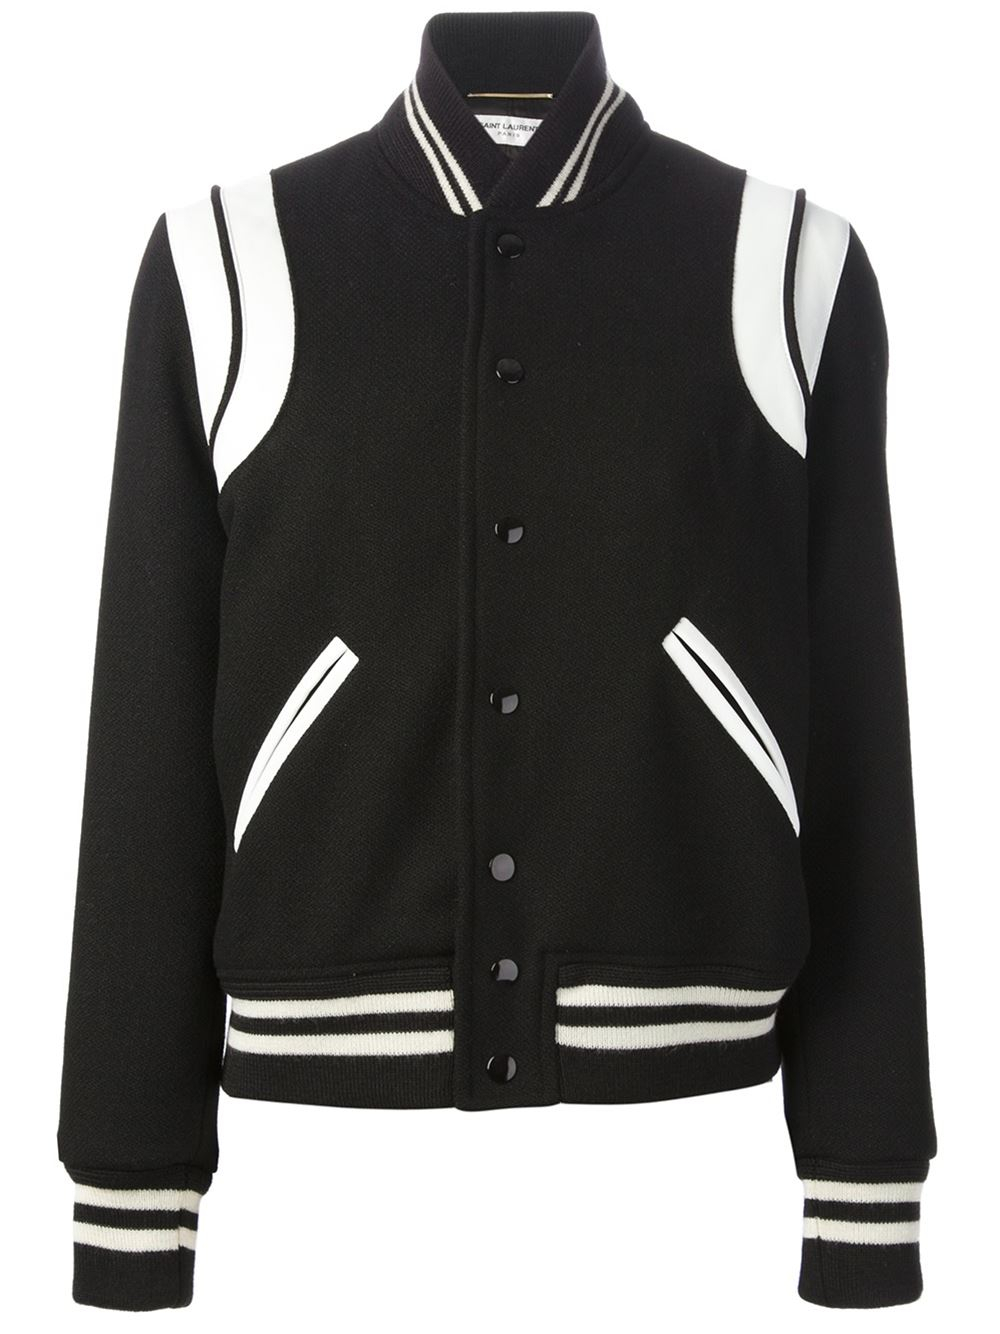 Lyst - Saint Laurent Teddy Leather-Trimmed Wool Varsity Jacket in Black